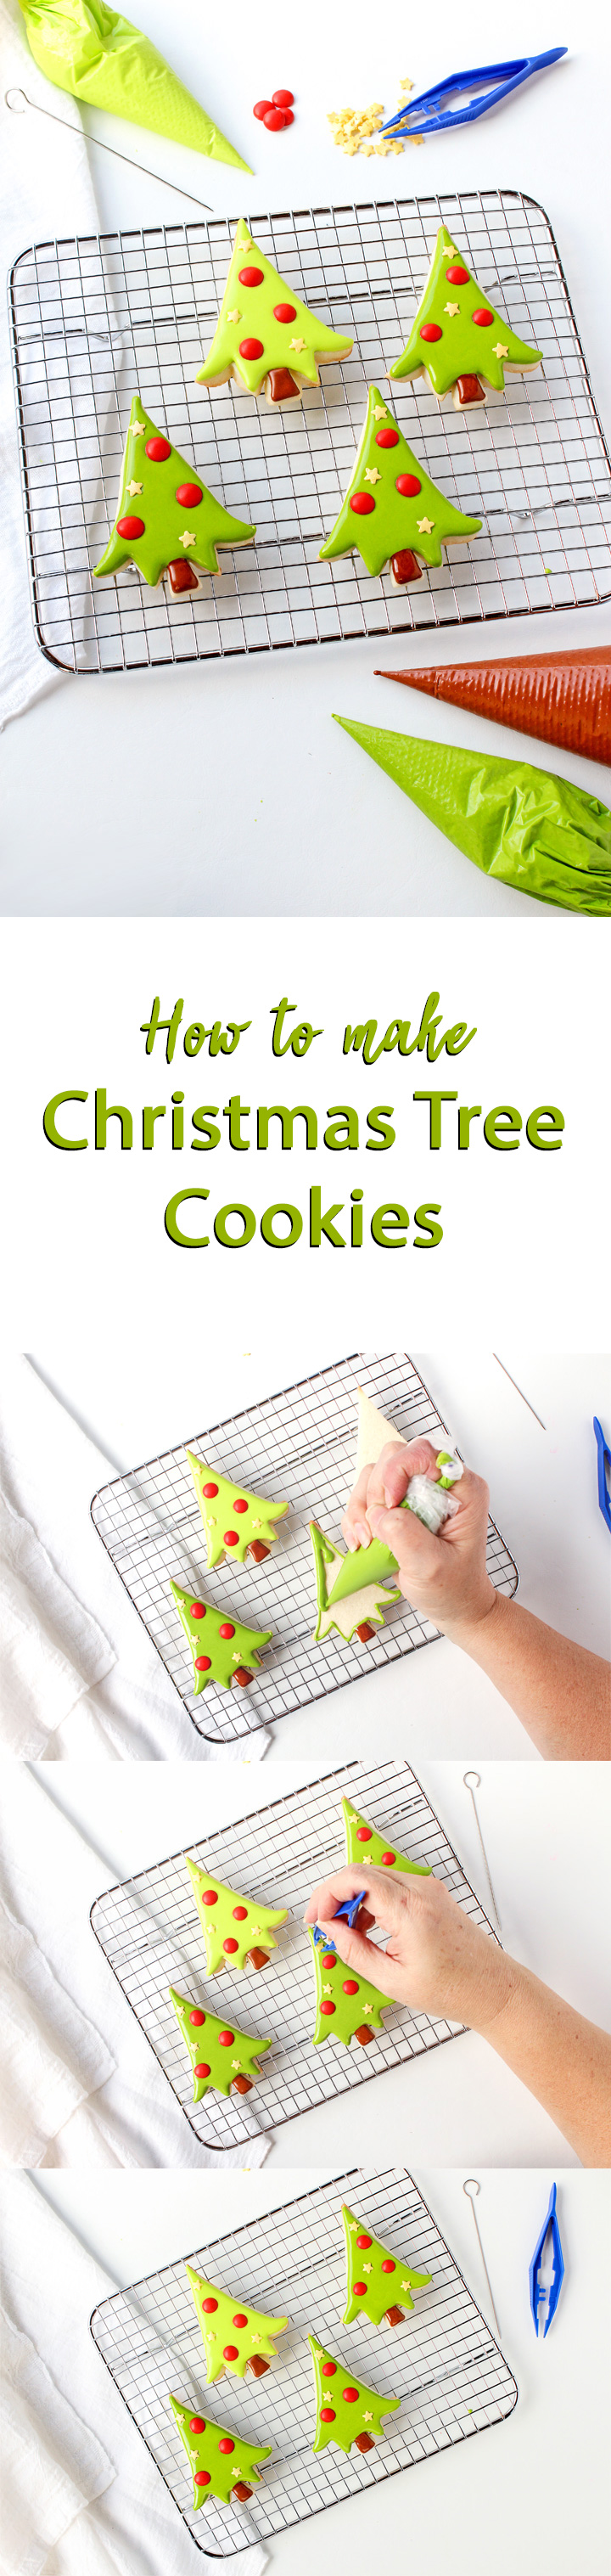 How to Make Christmas Tree Cookies | The Bearfoot Baker